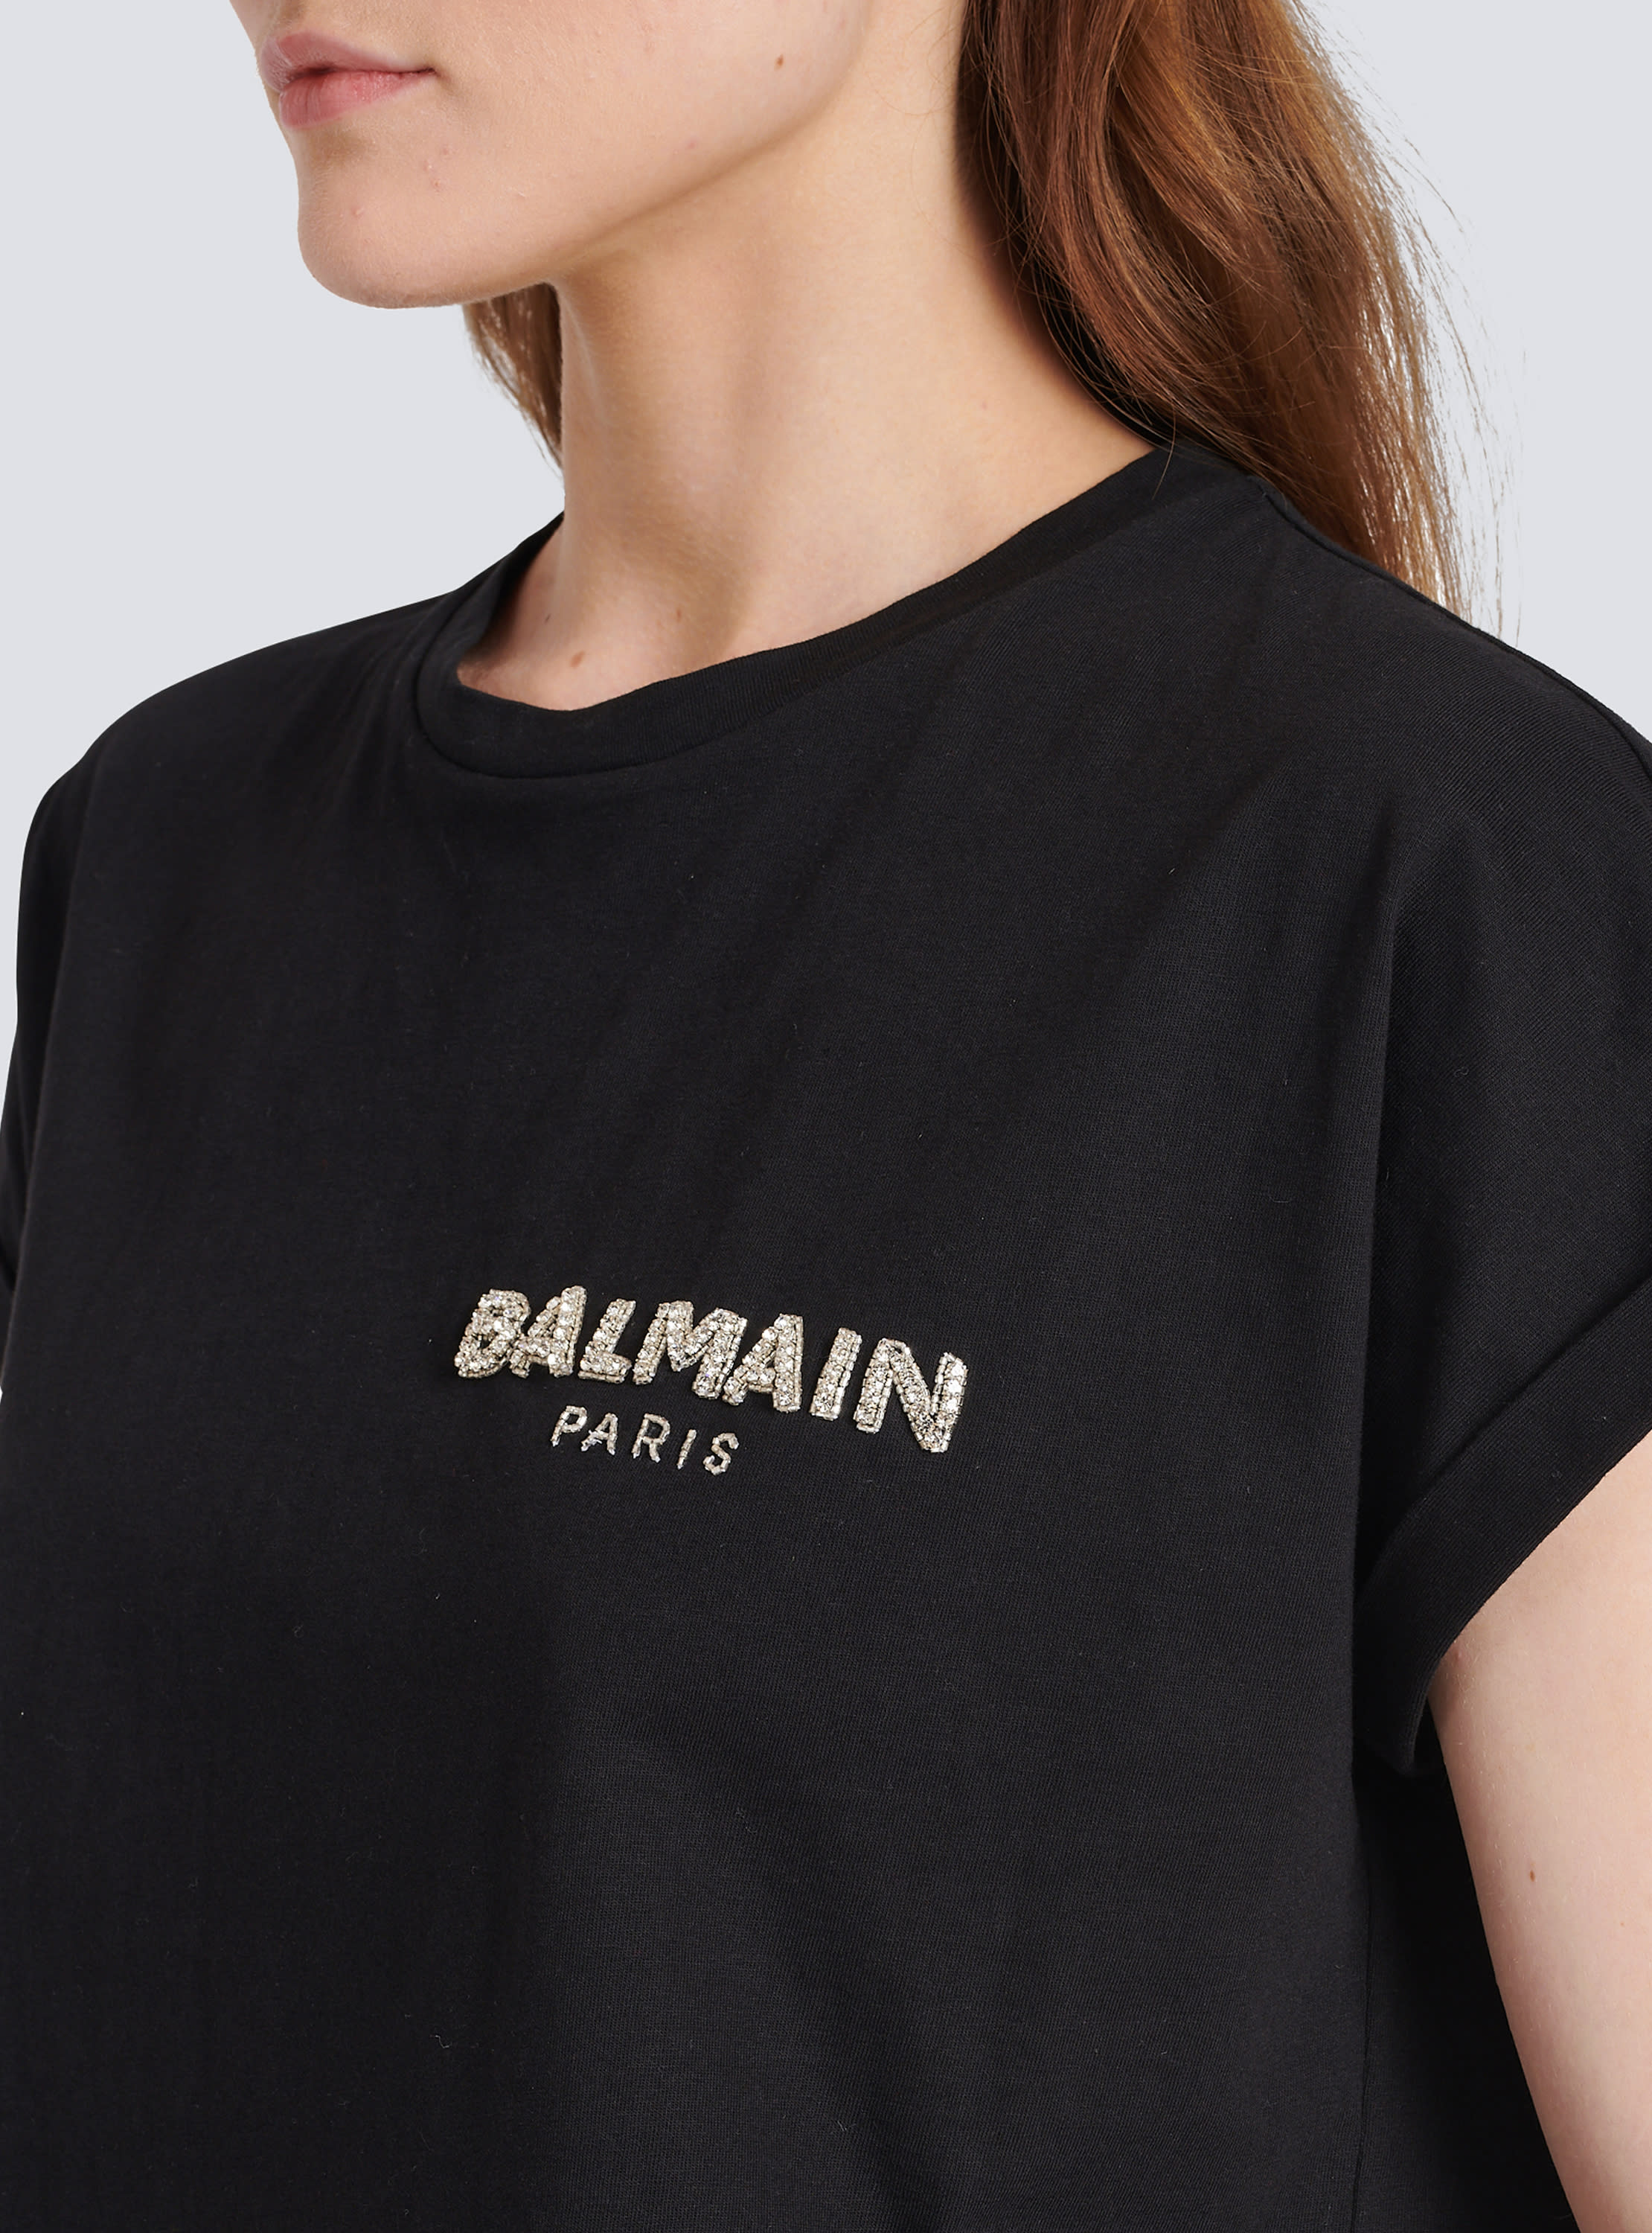 T-shirt corta in cotone con piccolo logo Balmain ricamato